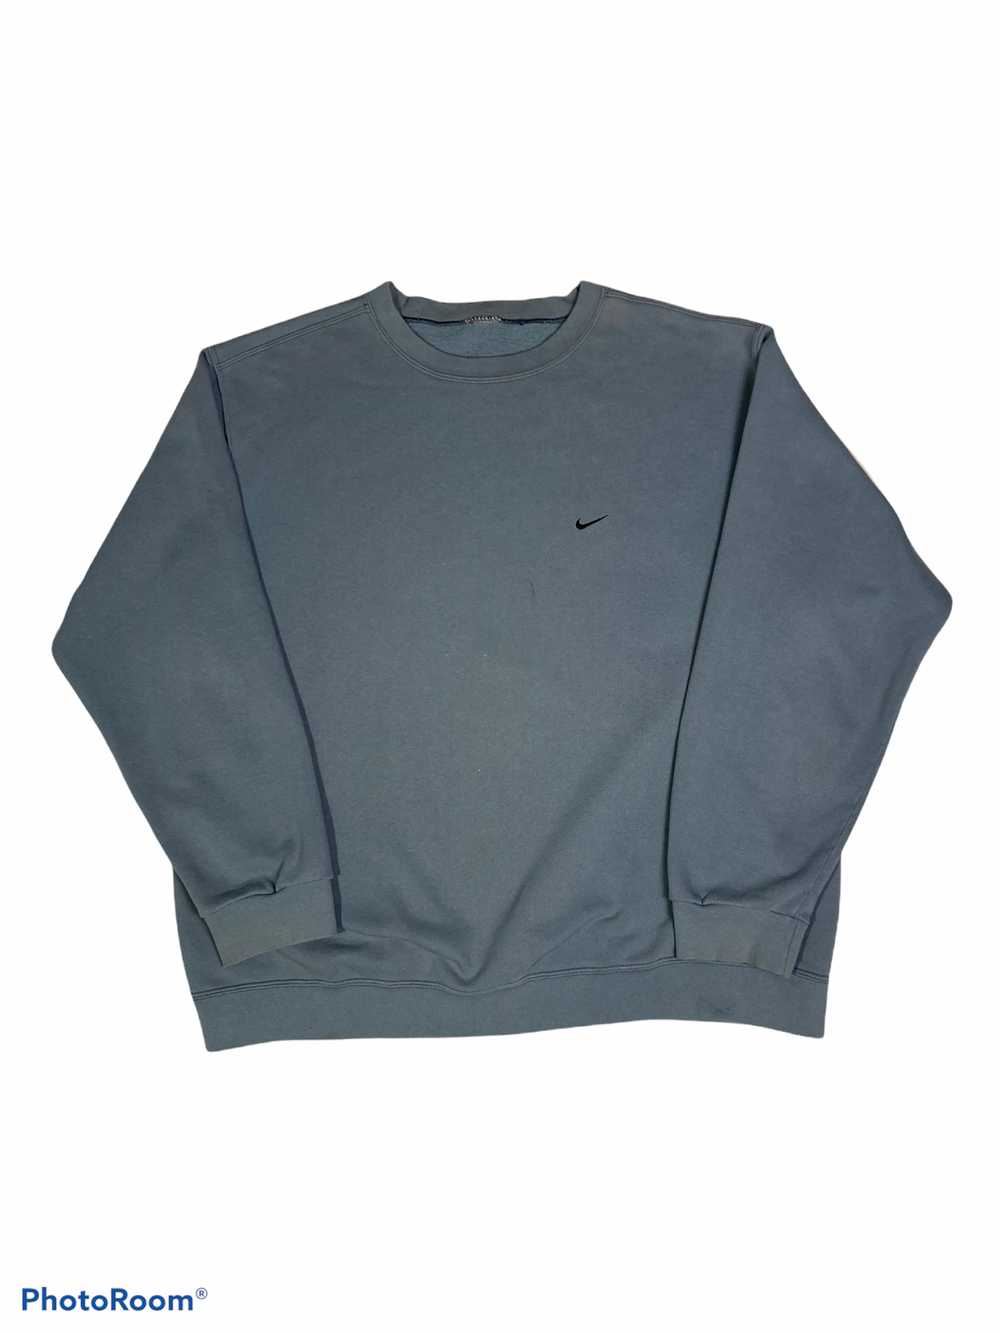 Vintage 90s Nike Baby Blue XL Sweatshirt - image 1